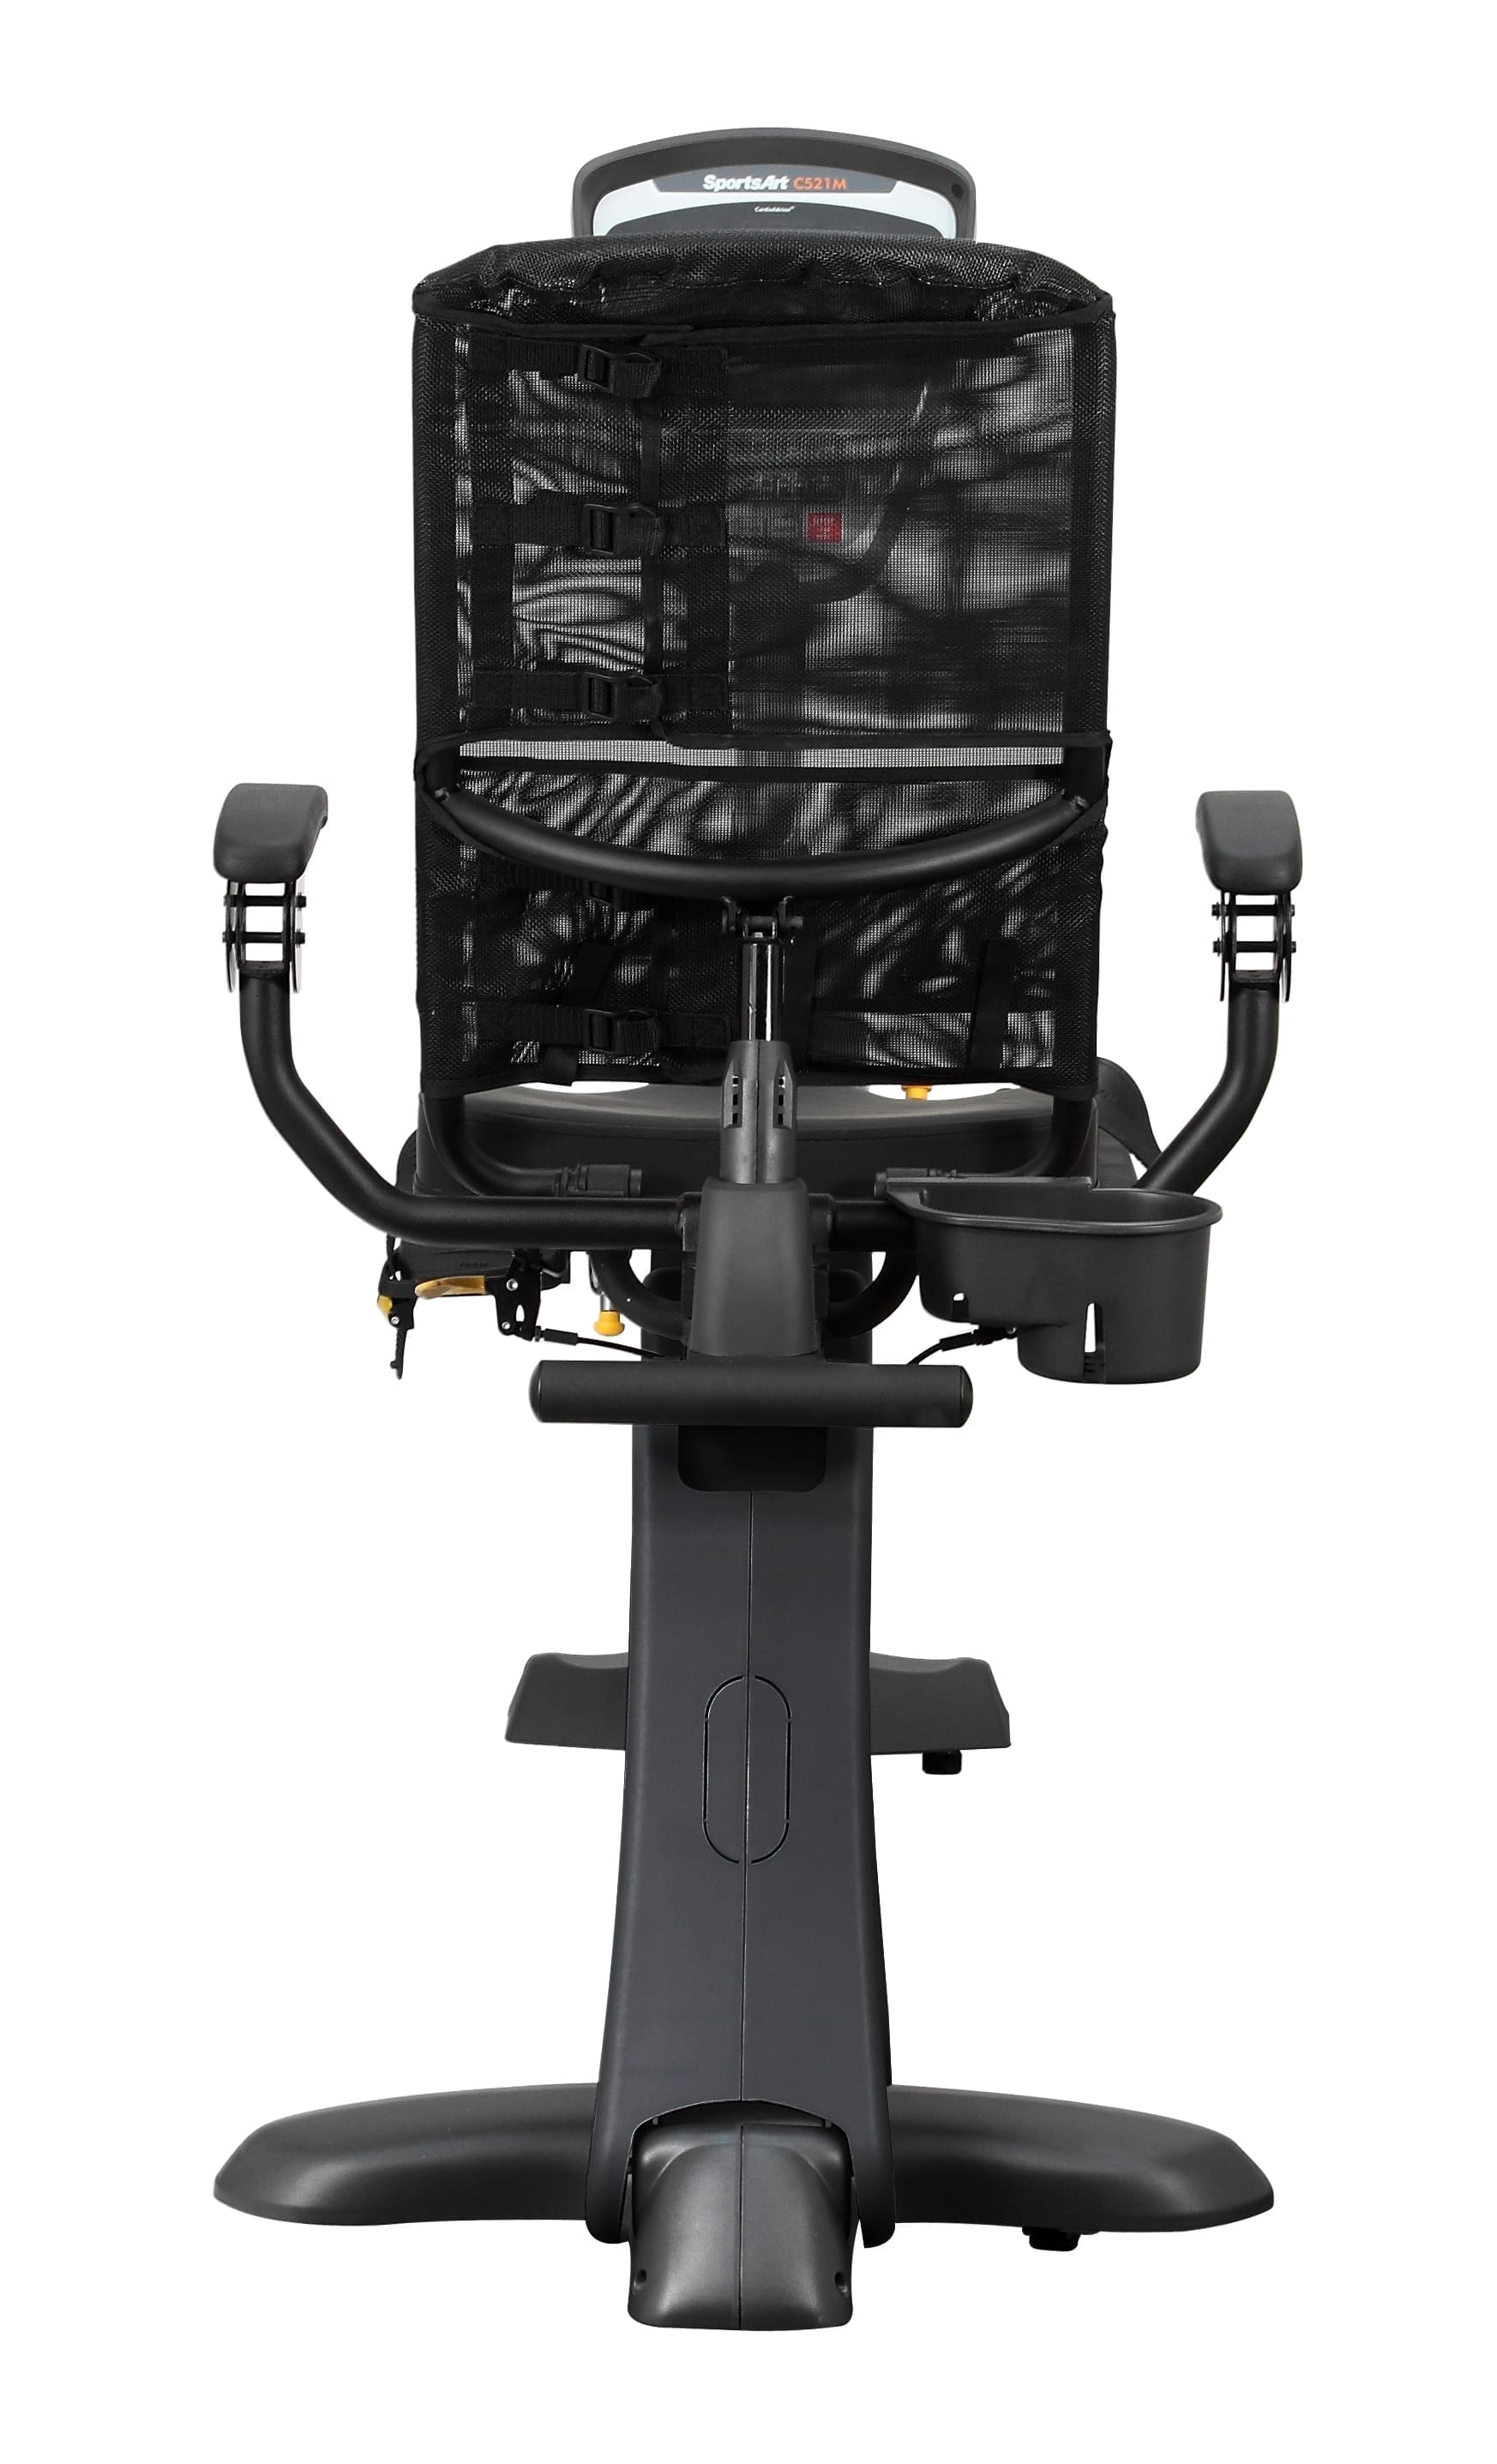 SportsArts Medical Bi Directional Cycle C521M back view 